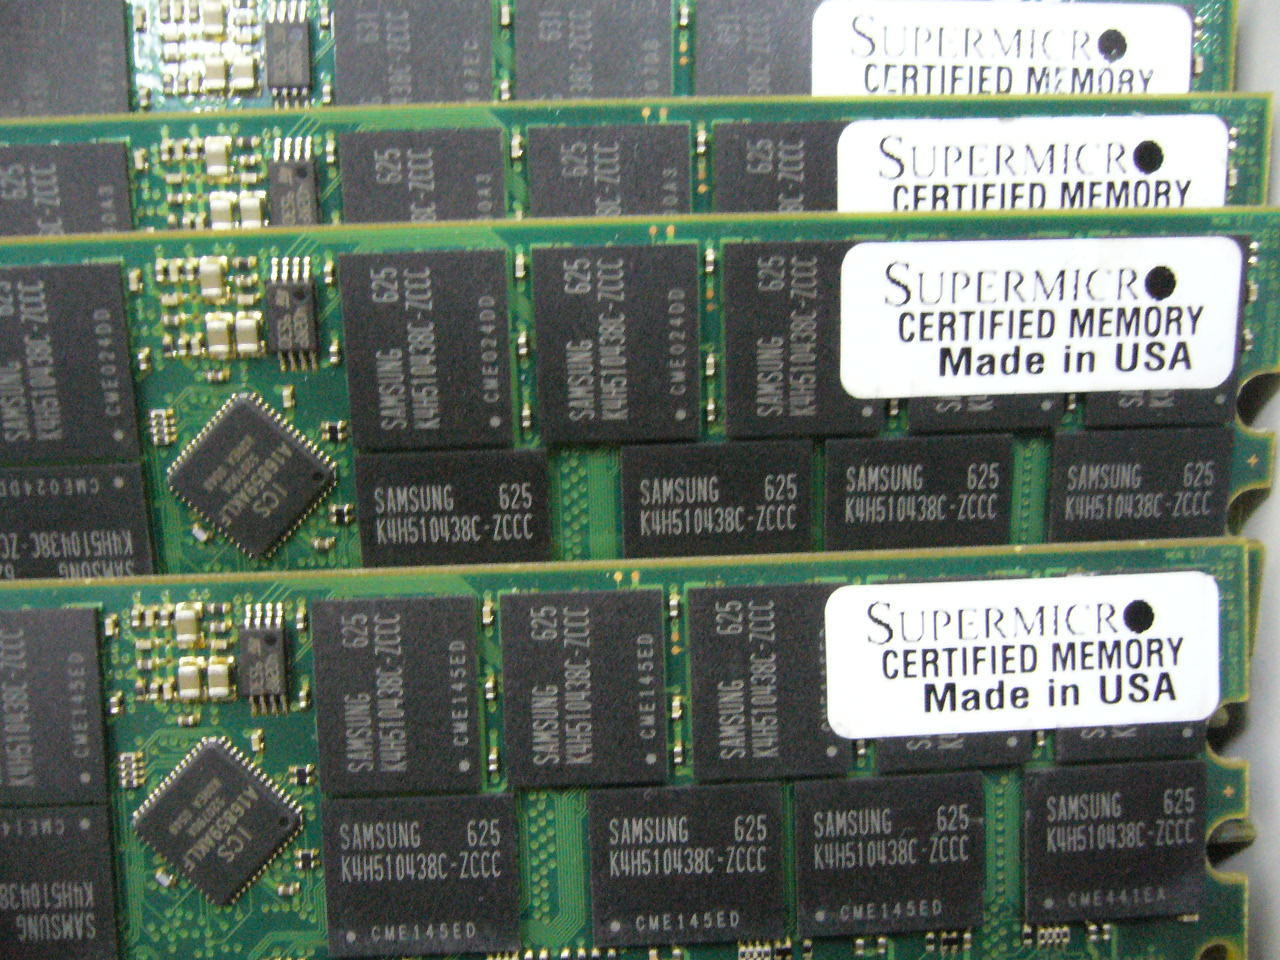 1x 2GB DDR PC3200R ECC Registered Server memory Supermicro Certified 3C965744C-L - Click Image to Close